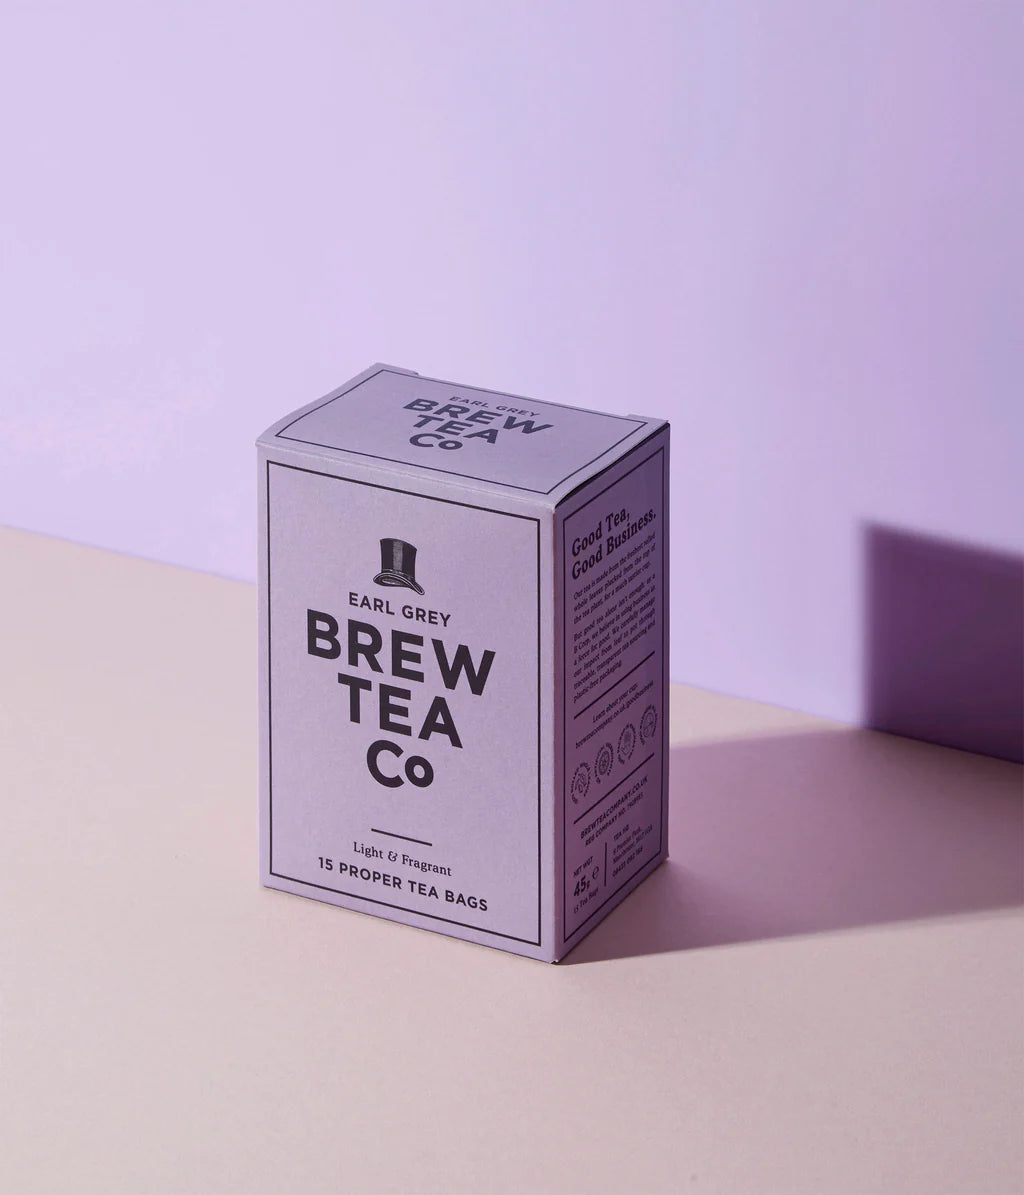 Brew Tea Co. Earl Gray Tea Bags